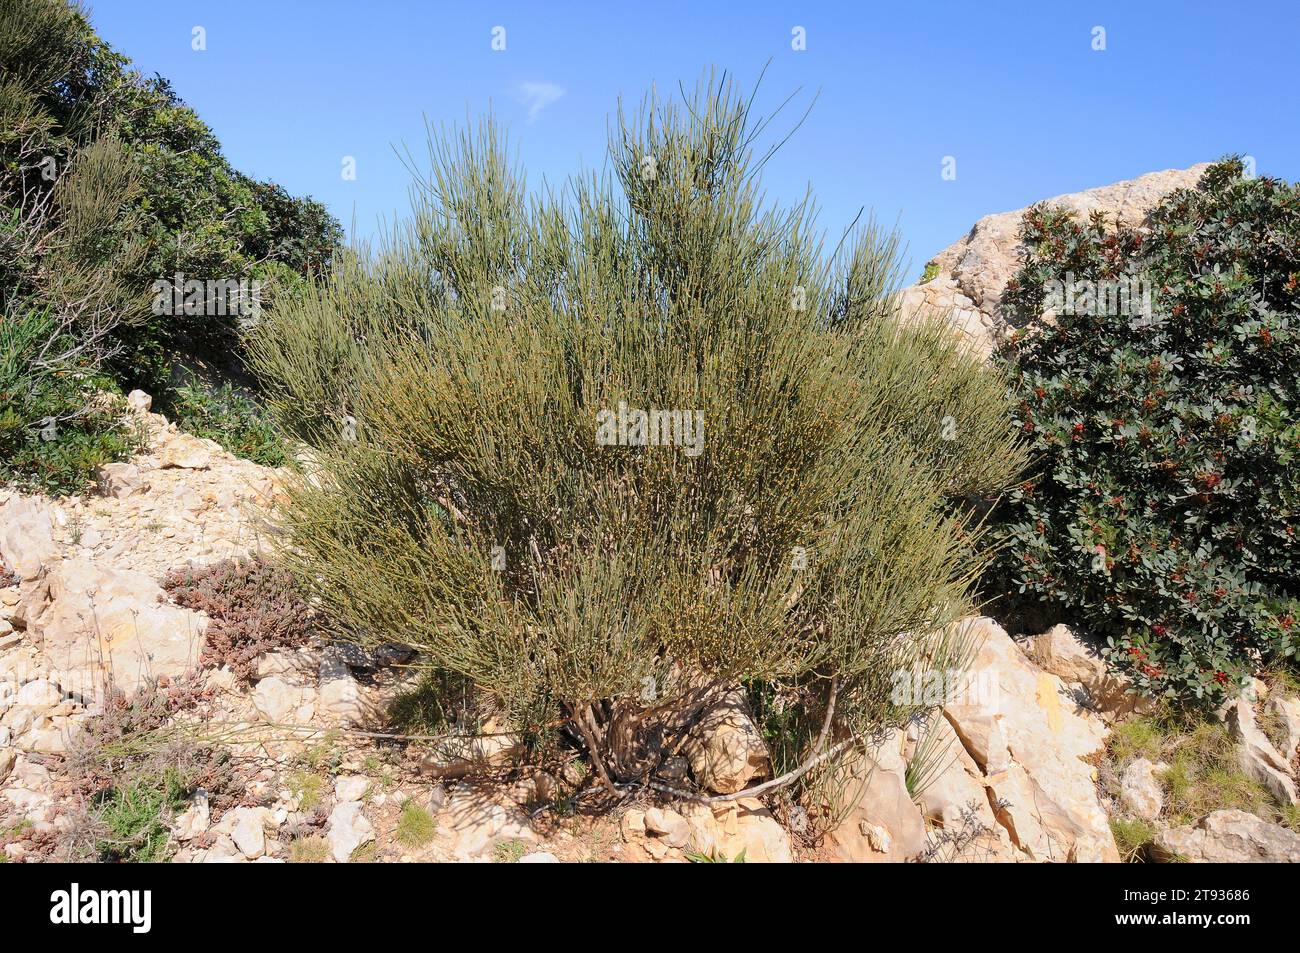 Joint pine (Ephedra fragilis) is a toxic shrub native to west Mediterranean region. This photo was taken in Mallorca island, Balearic Islands, Spain. Stock Photo